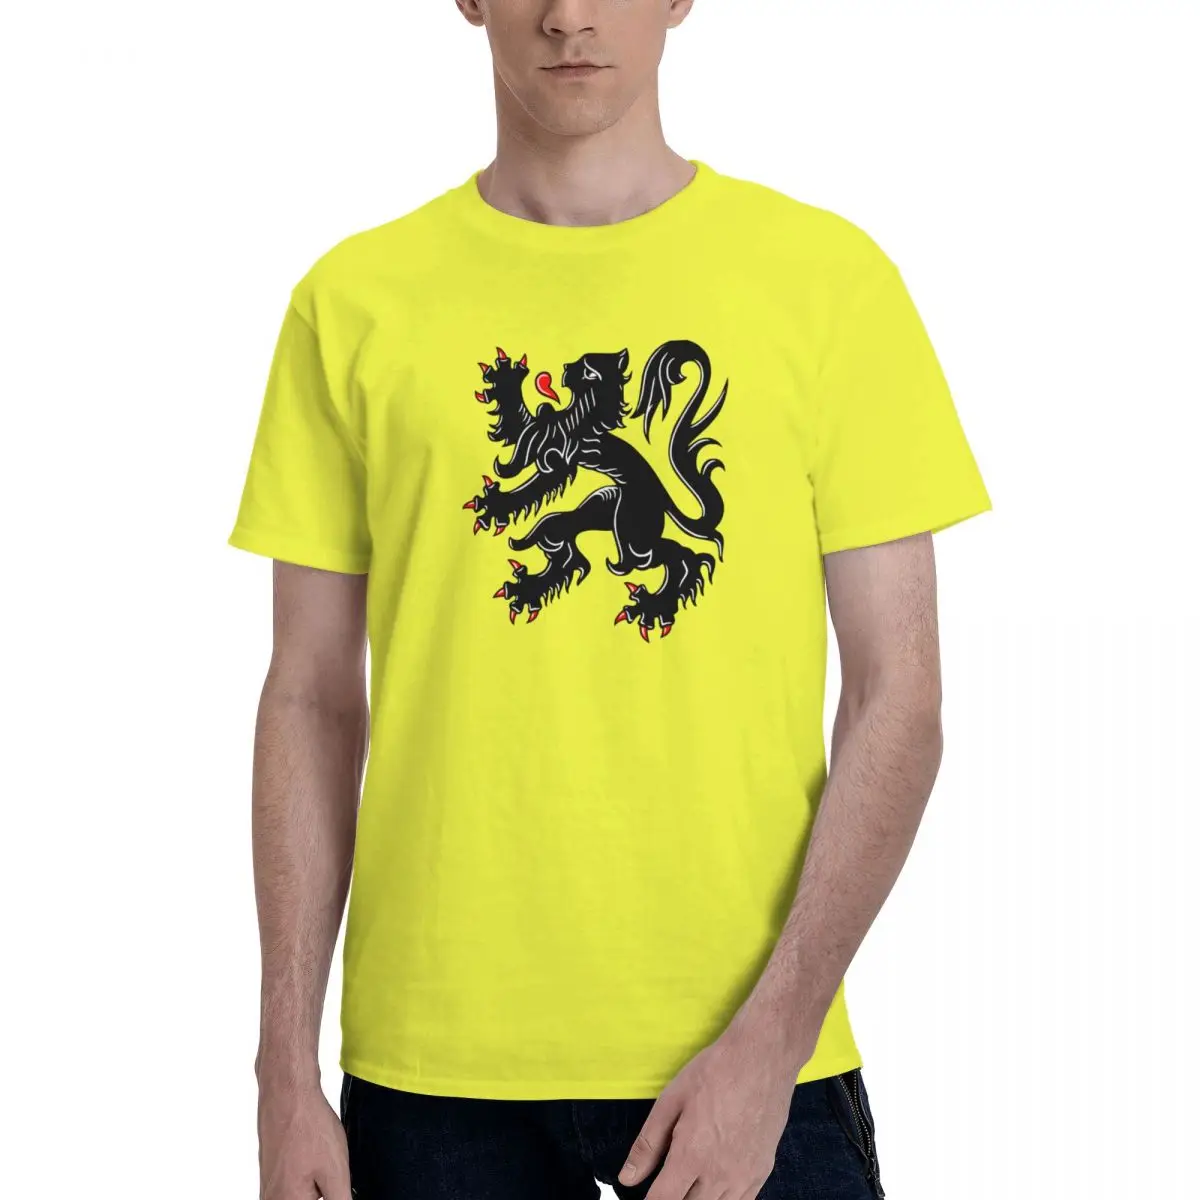 

Flemish Football Shirt Essential Tee Men's Basic Short Sleeve T-Shirt Vintage Tops Free shipping